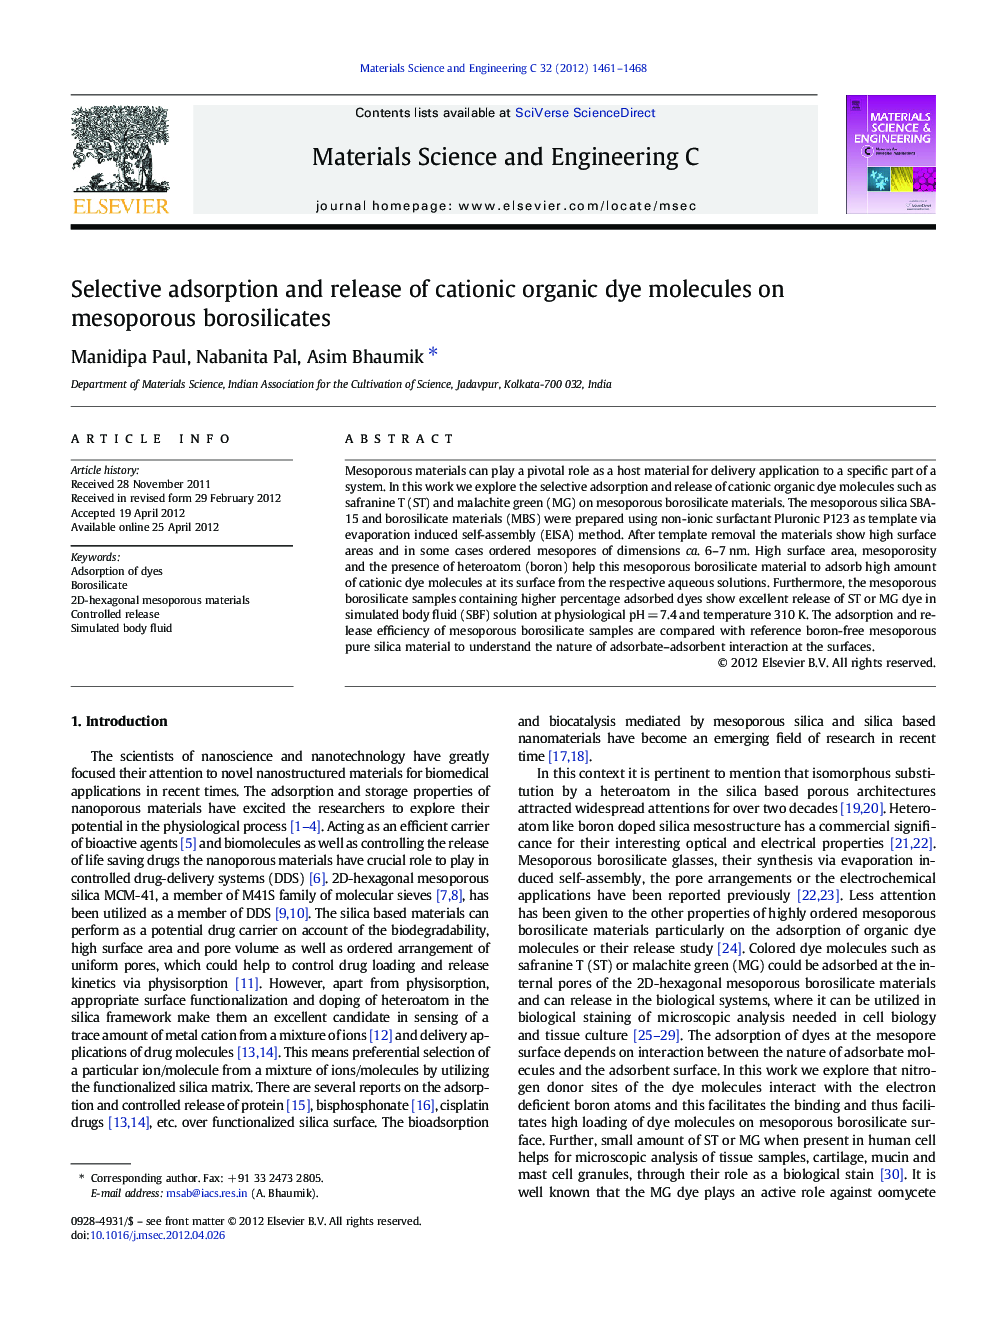 Selective adsorption and release of cationic organic dye molecules on mesoporous borosilicates